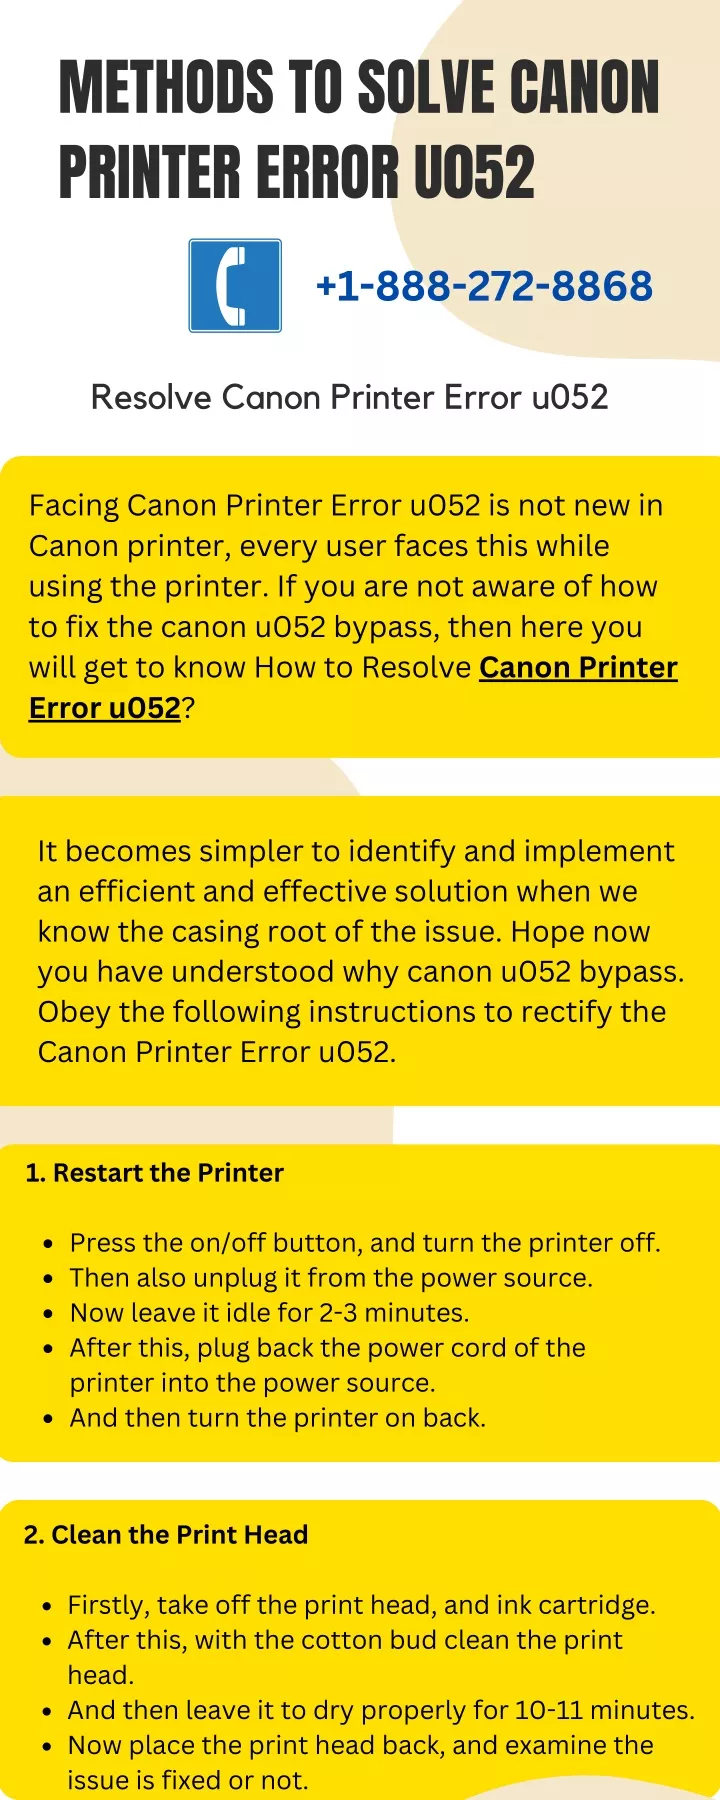 methods to solve canon printer error u052